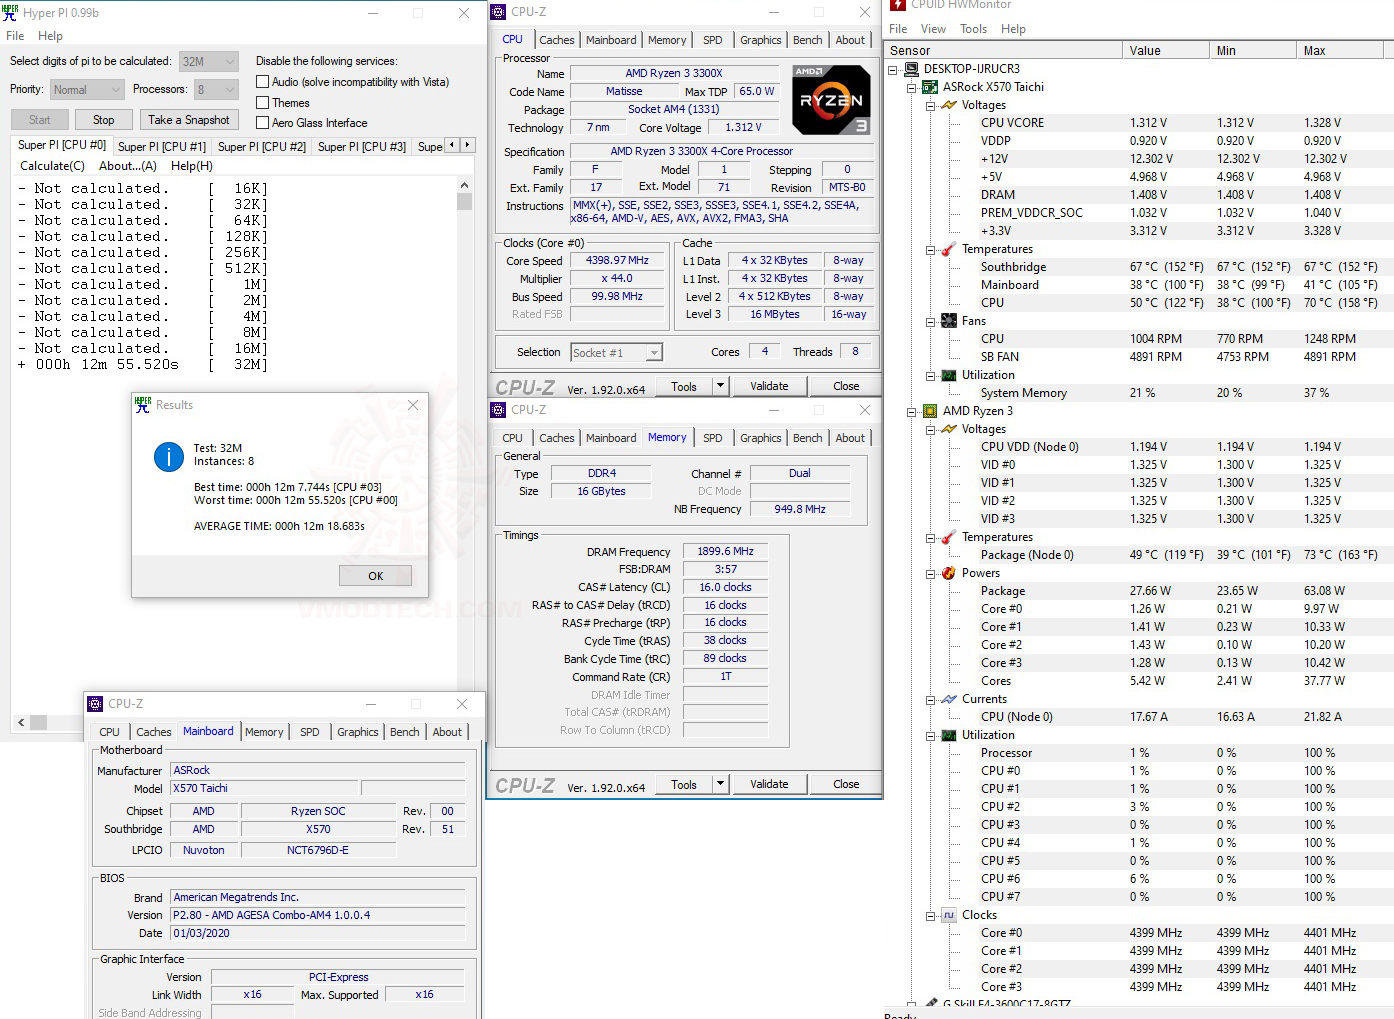 h32 oc1 AMD RYZEN 3 3300X PROCESSOR REVIEW